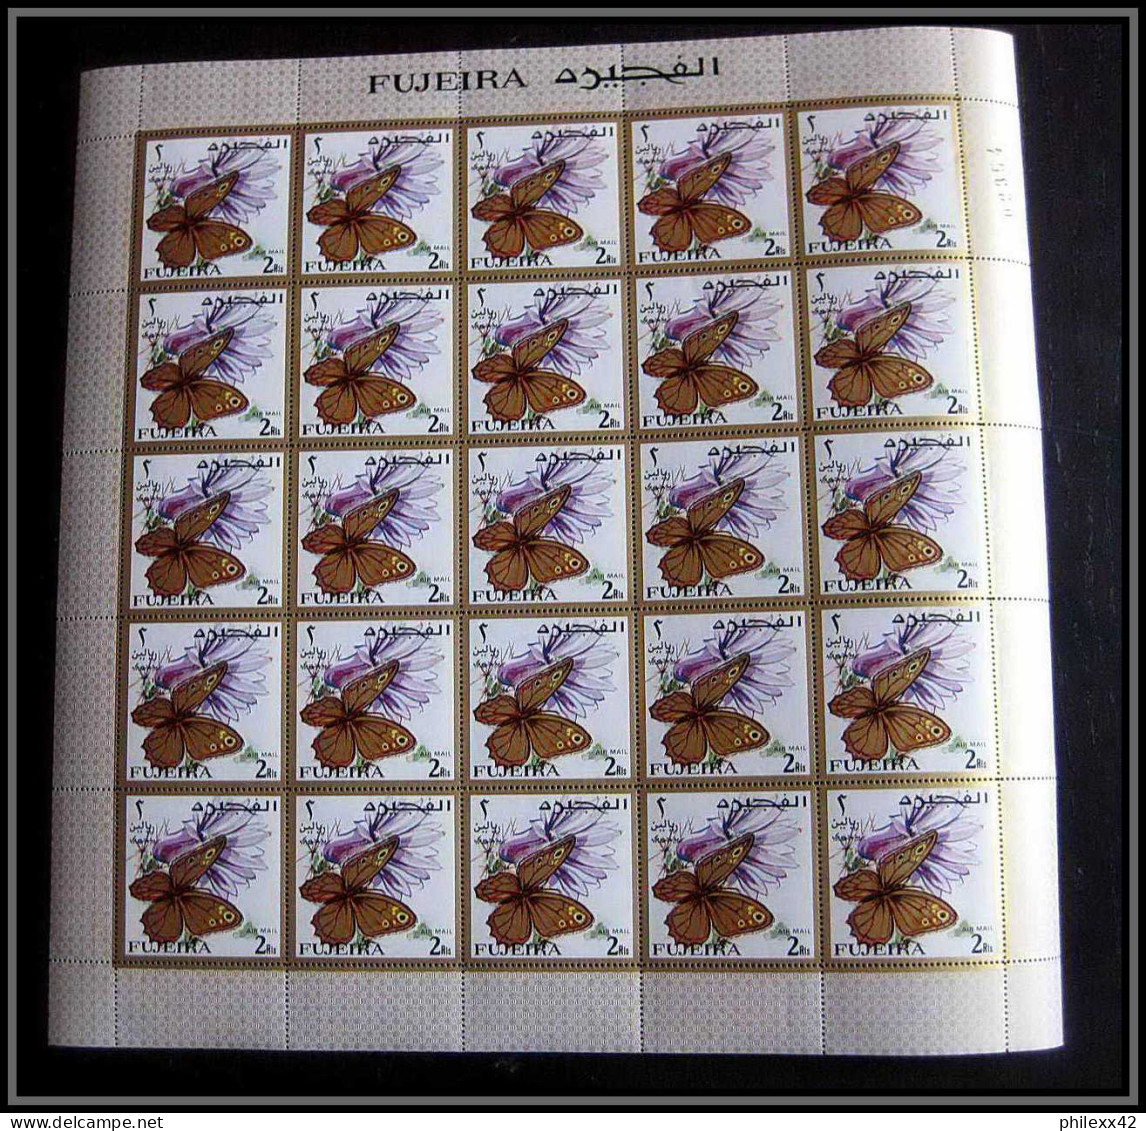 240b - Fujeira MNH ** Mi N° 159 / 185 A papillons (butterflies papillon) feuilles (sheets) rarissime cote 500 euros